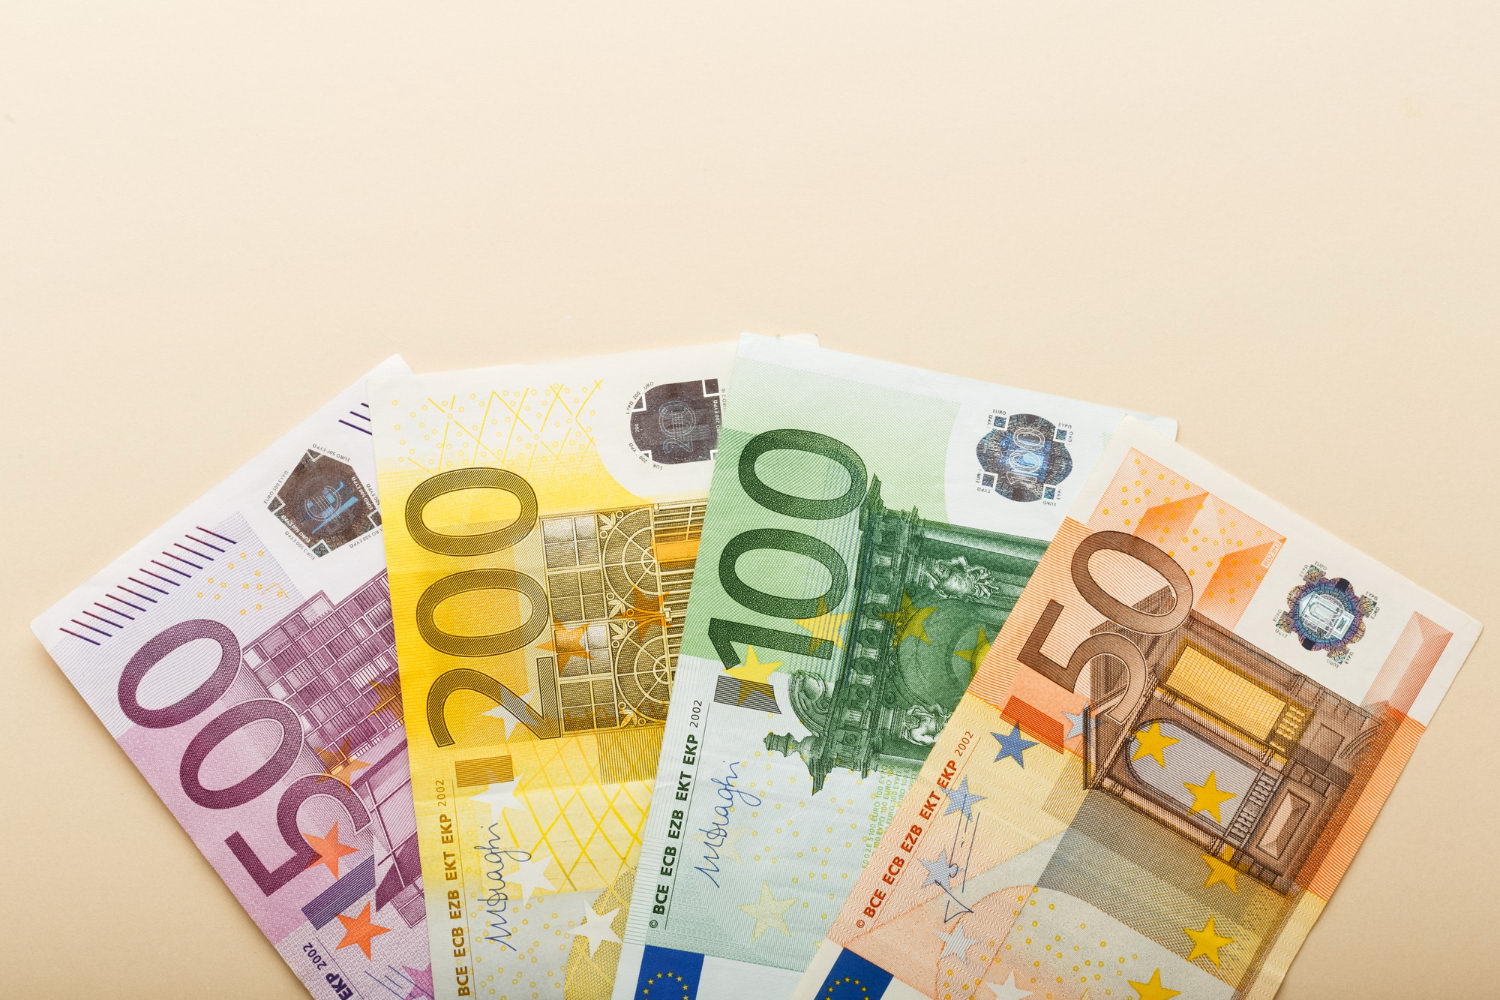 bancnote de euro